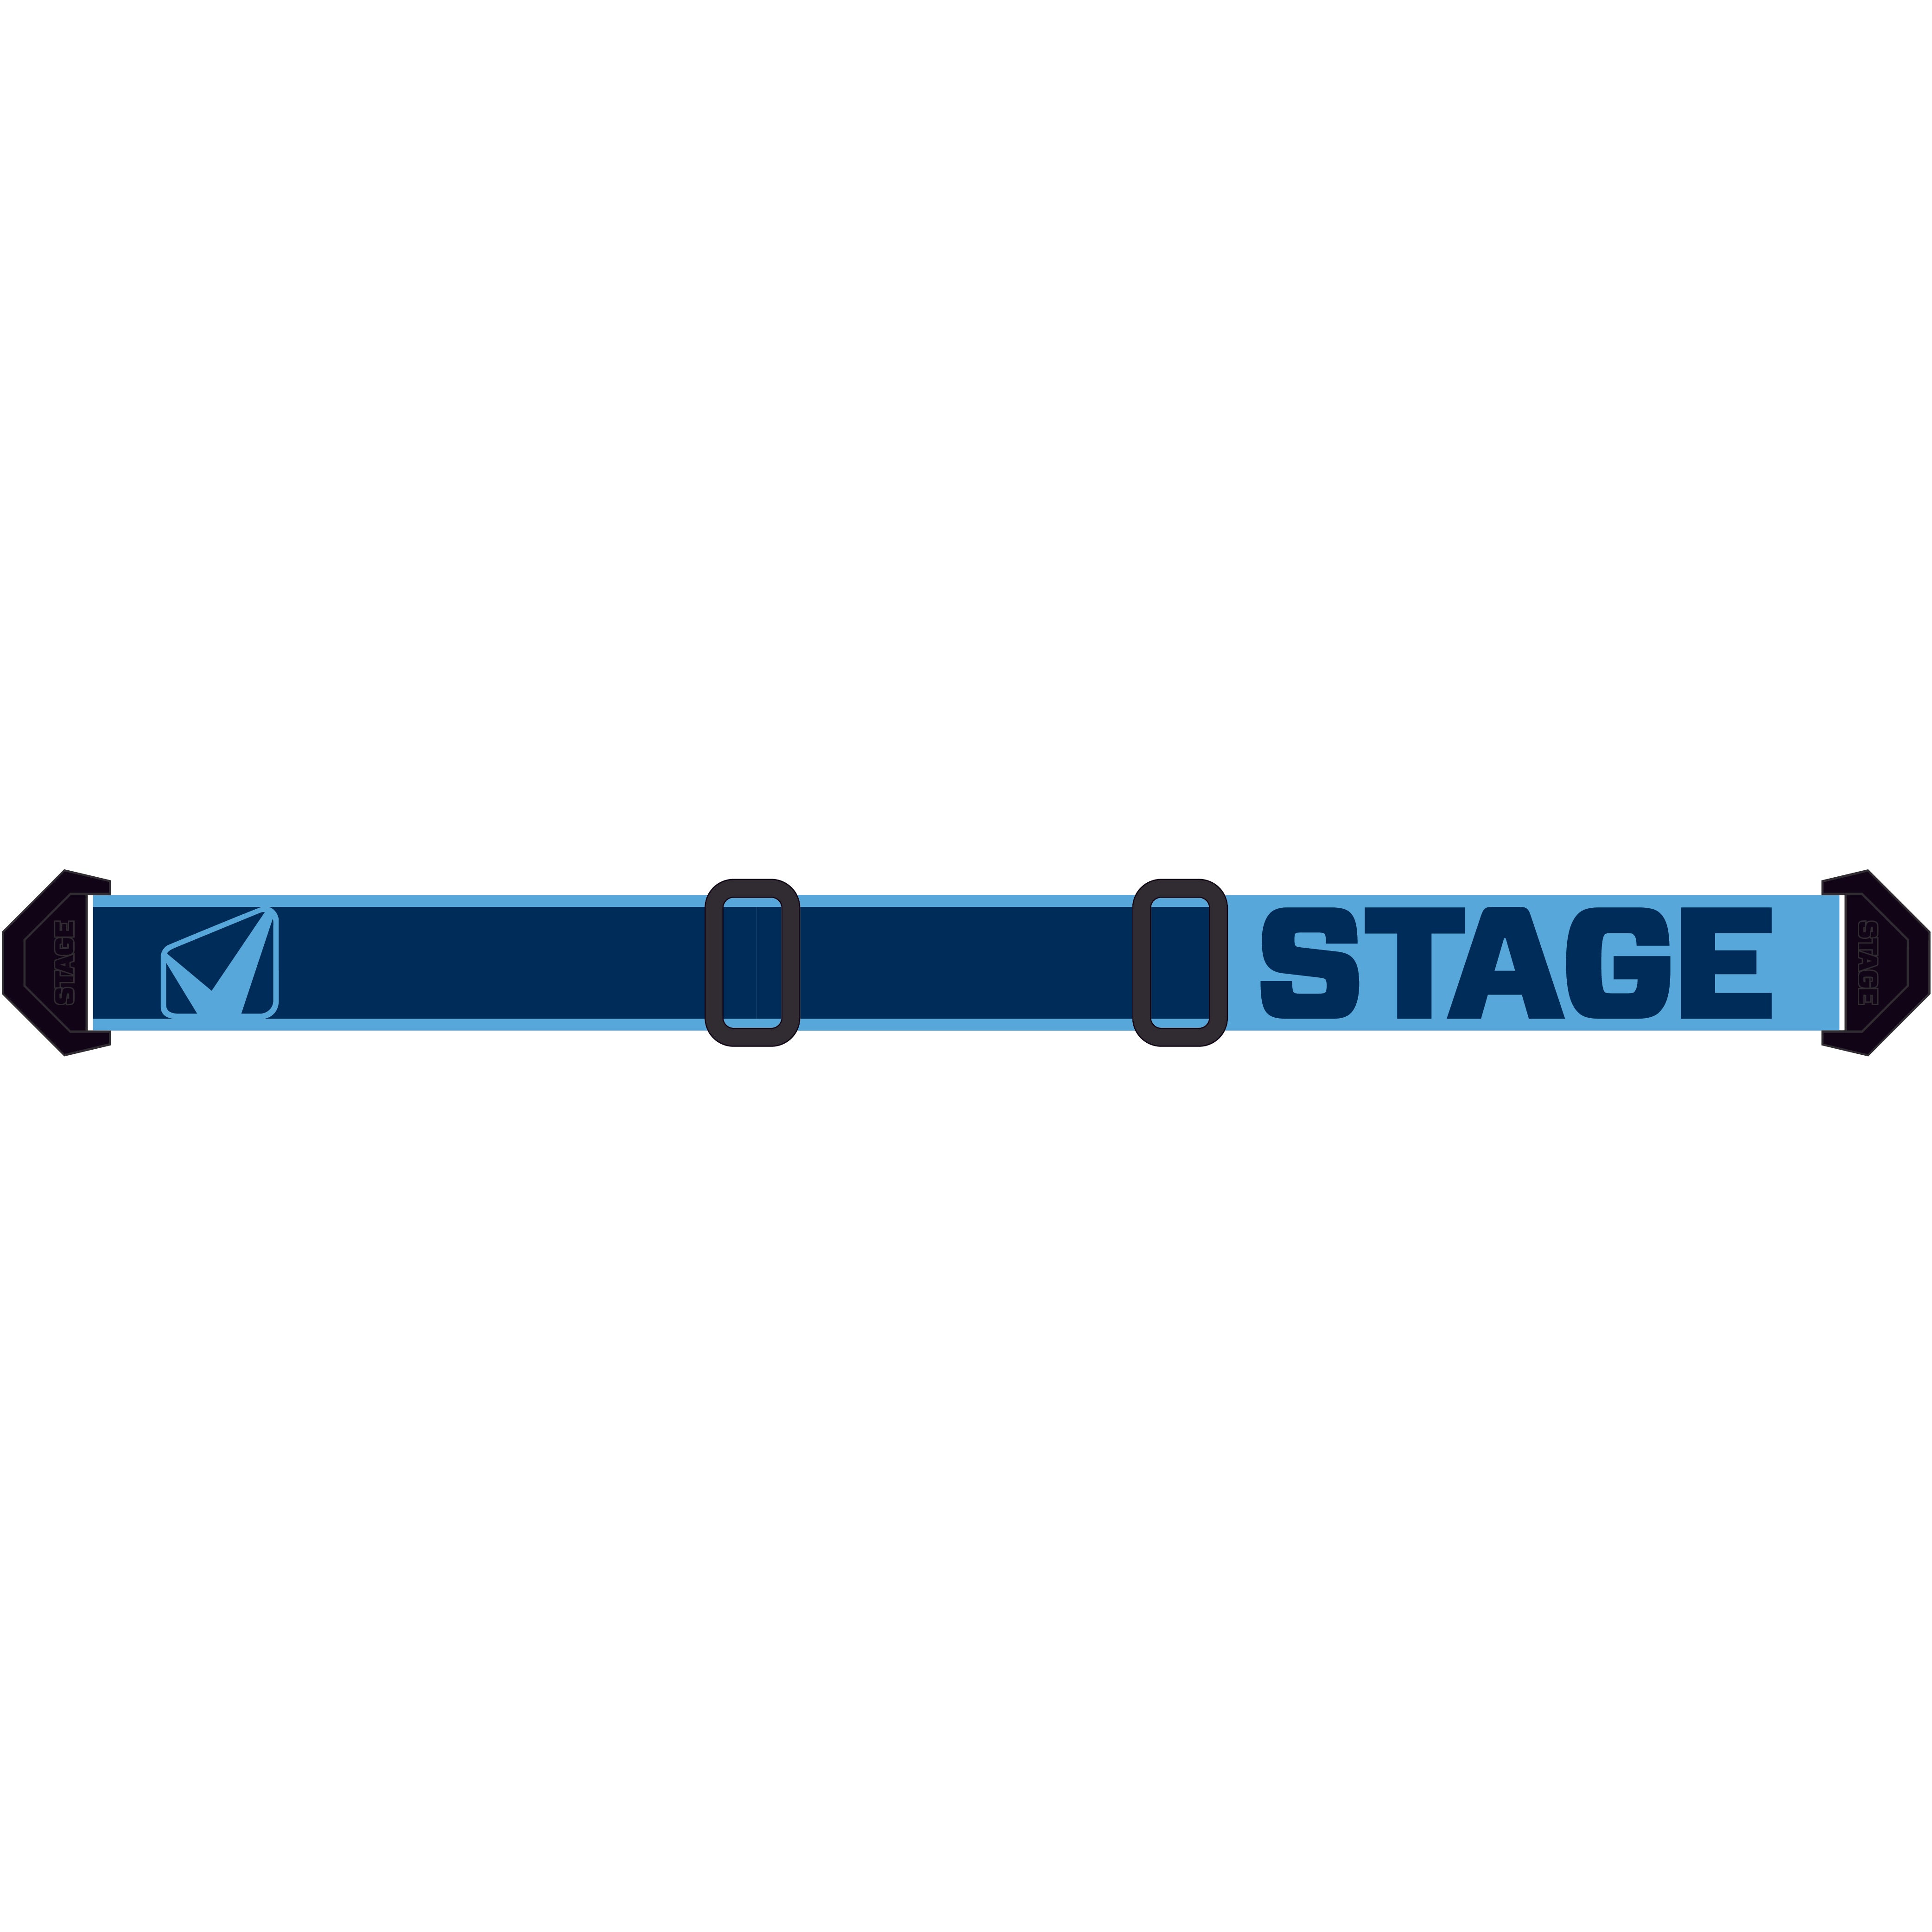 StageStuntStrap-PowBlue.jpg